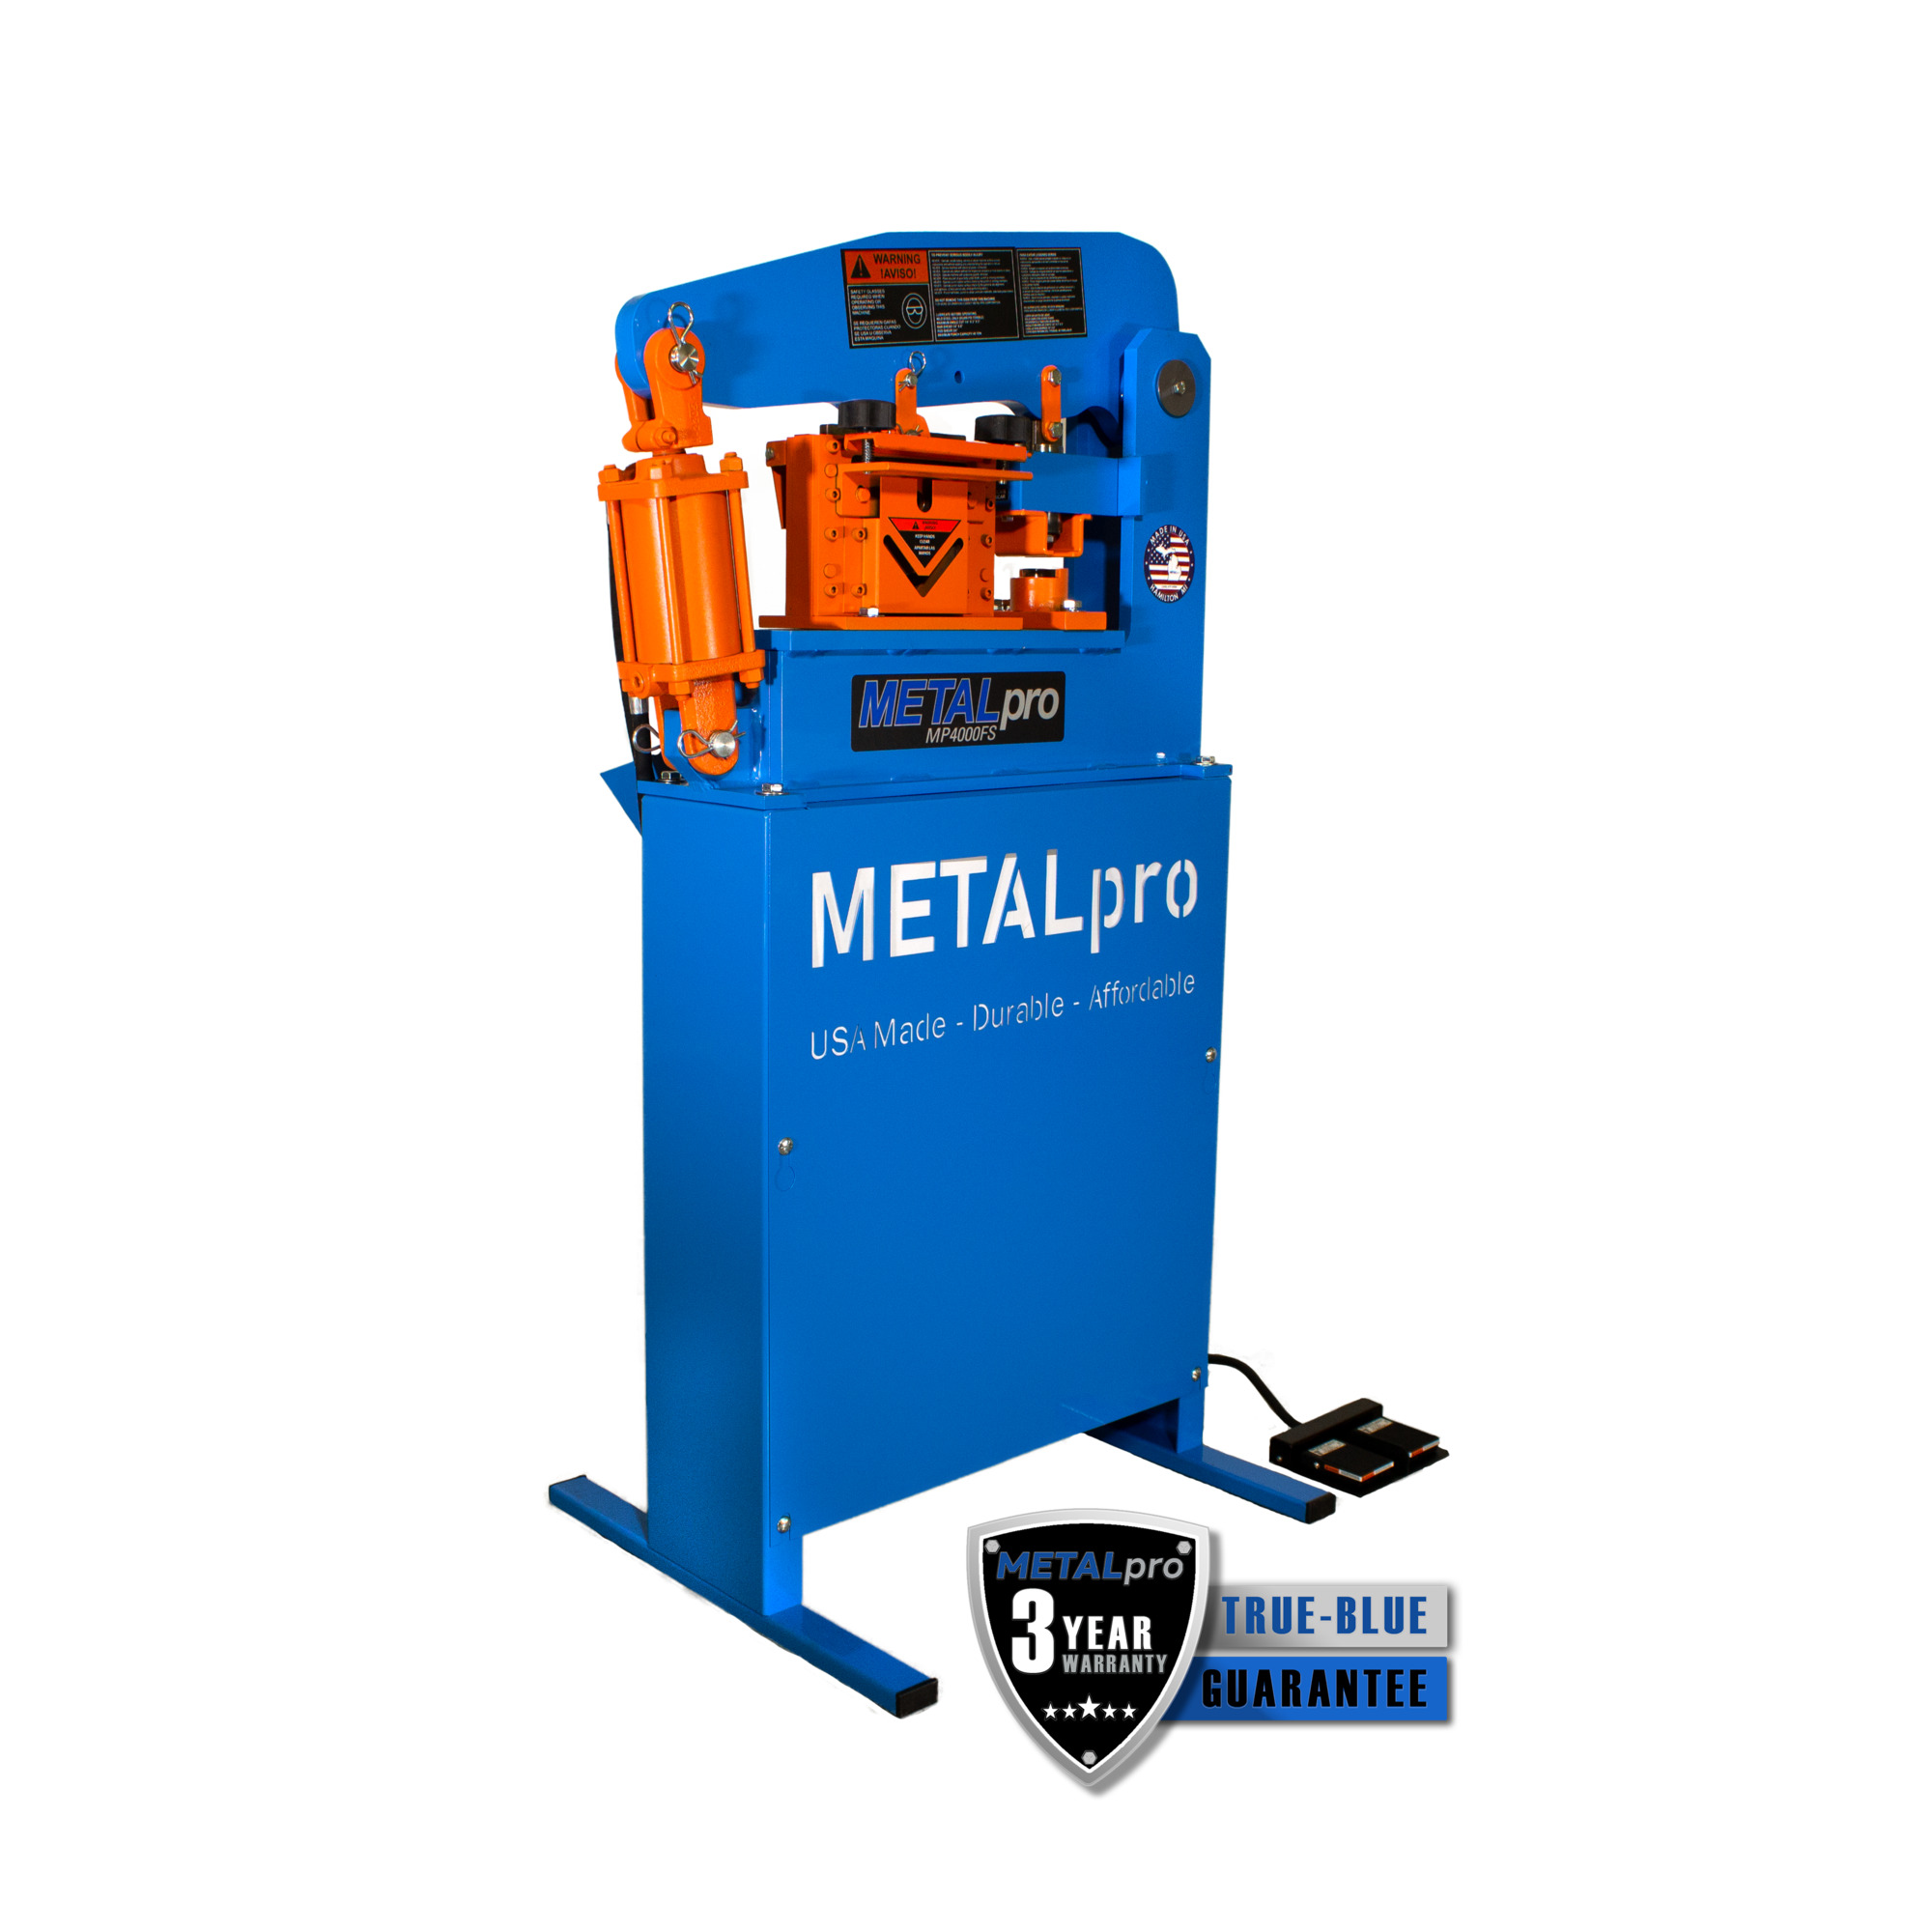 METALpro Ironworker, 40-Ton, Foot Switch Control, Model MP4000FS